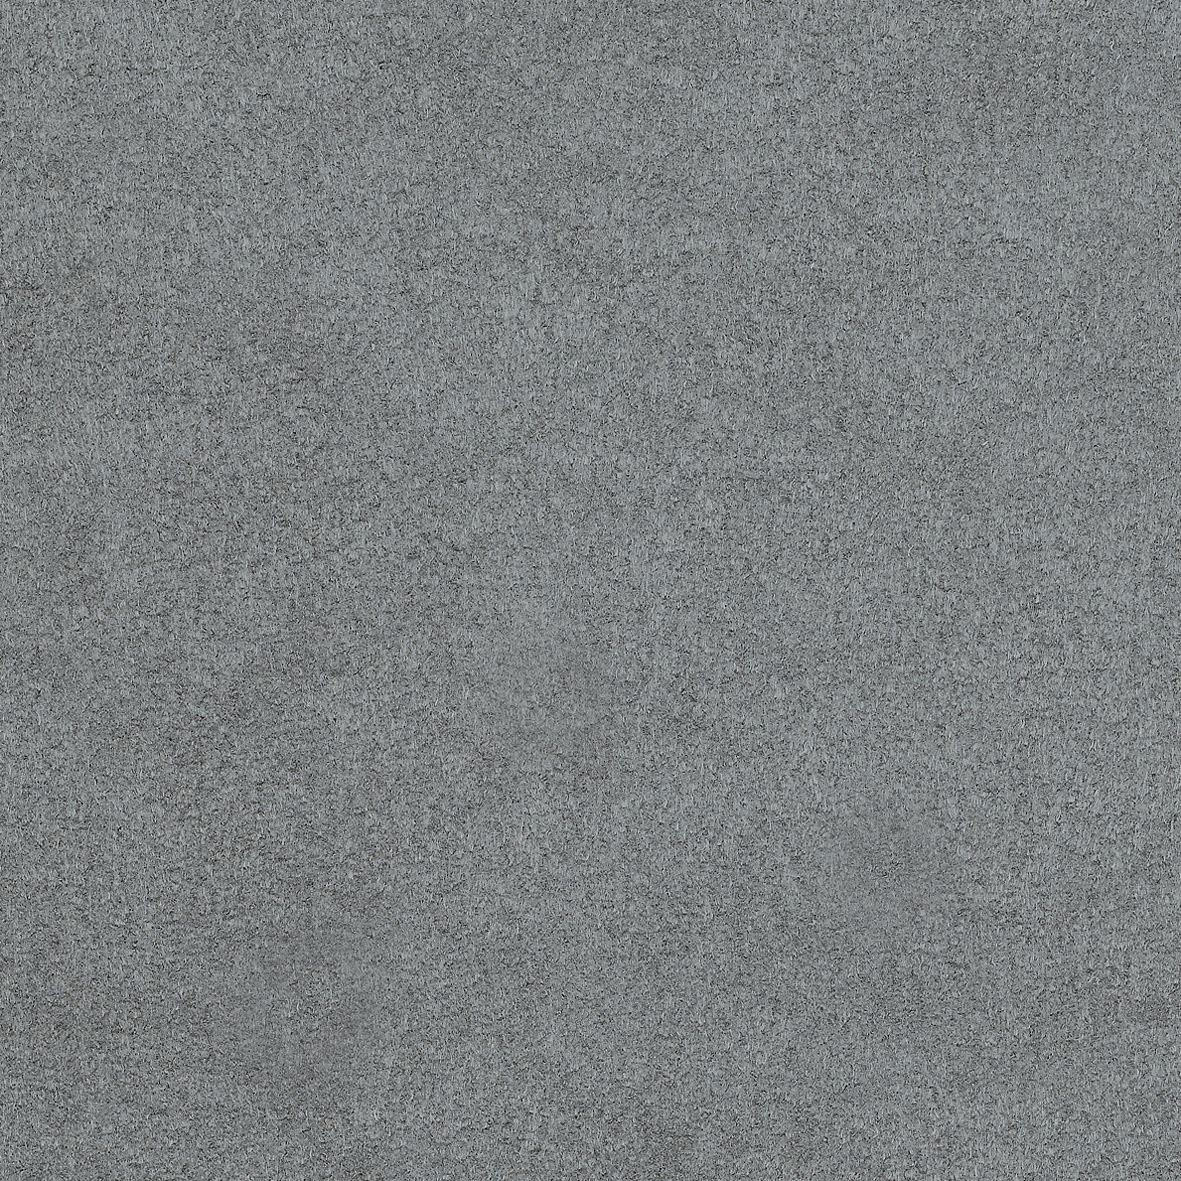 BÜROHOCKER Mikrofaser Grau, Weiß  - Weiß/Grau, Basics, Kunststoff/Textil (55/105,115/55cm) - Aeris